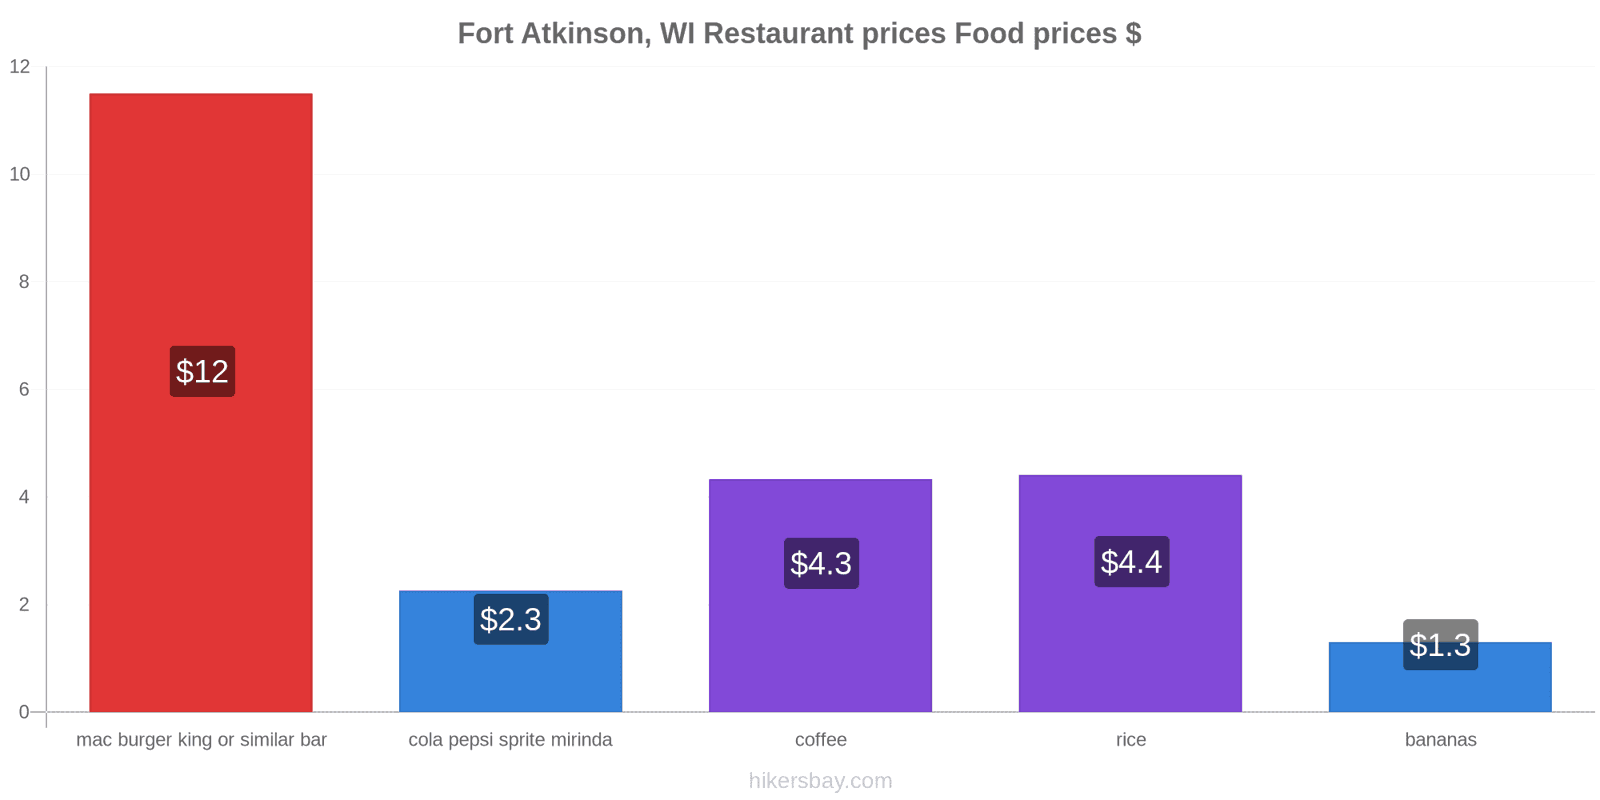 Fort Atkinson, WI price changes hikersbay.com